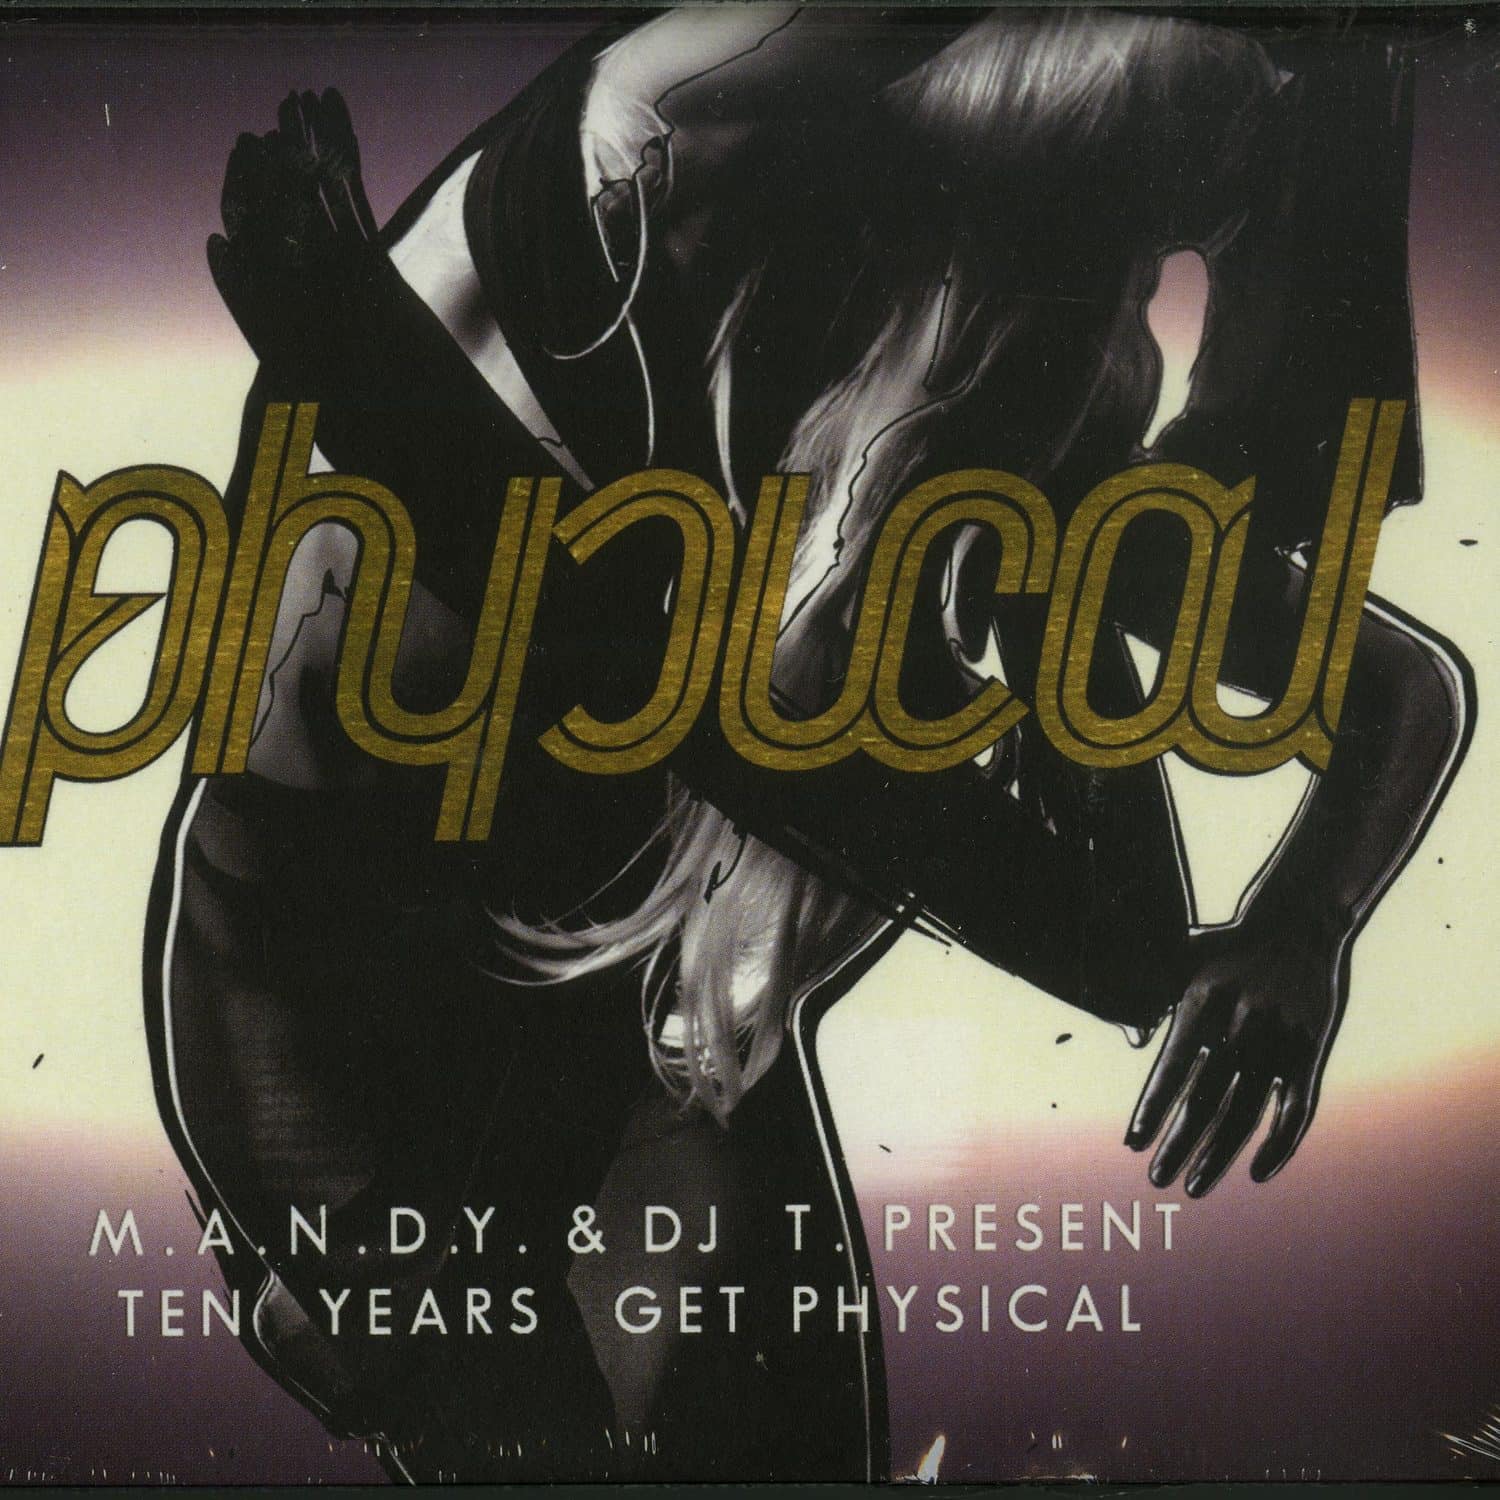 M.A.N.D.Y. & DJ T. - TEN YEARS GET PHYSICAL 